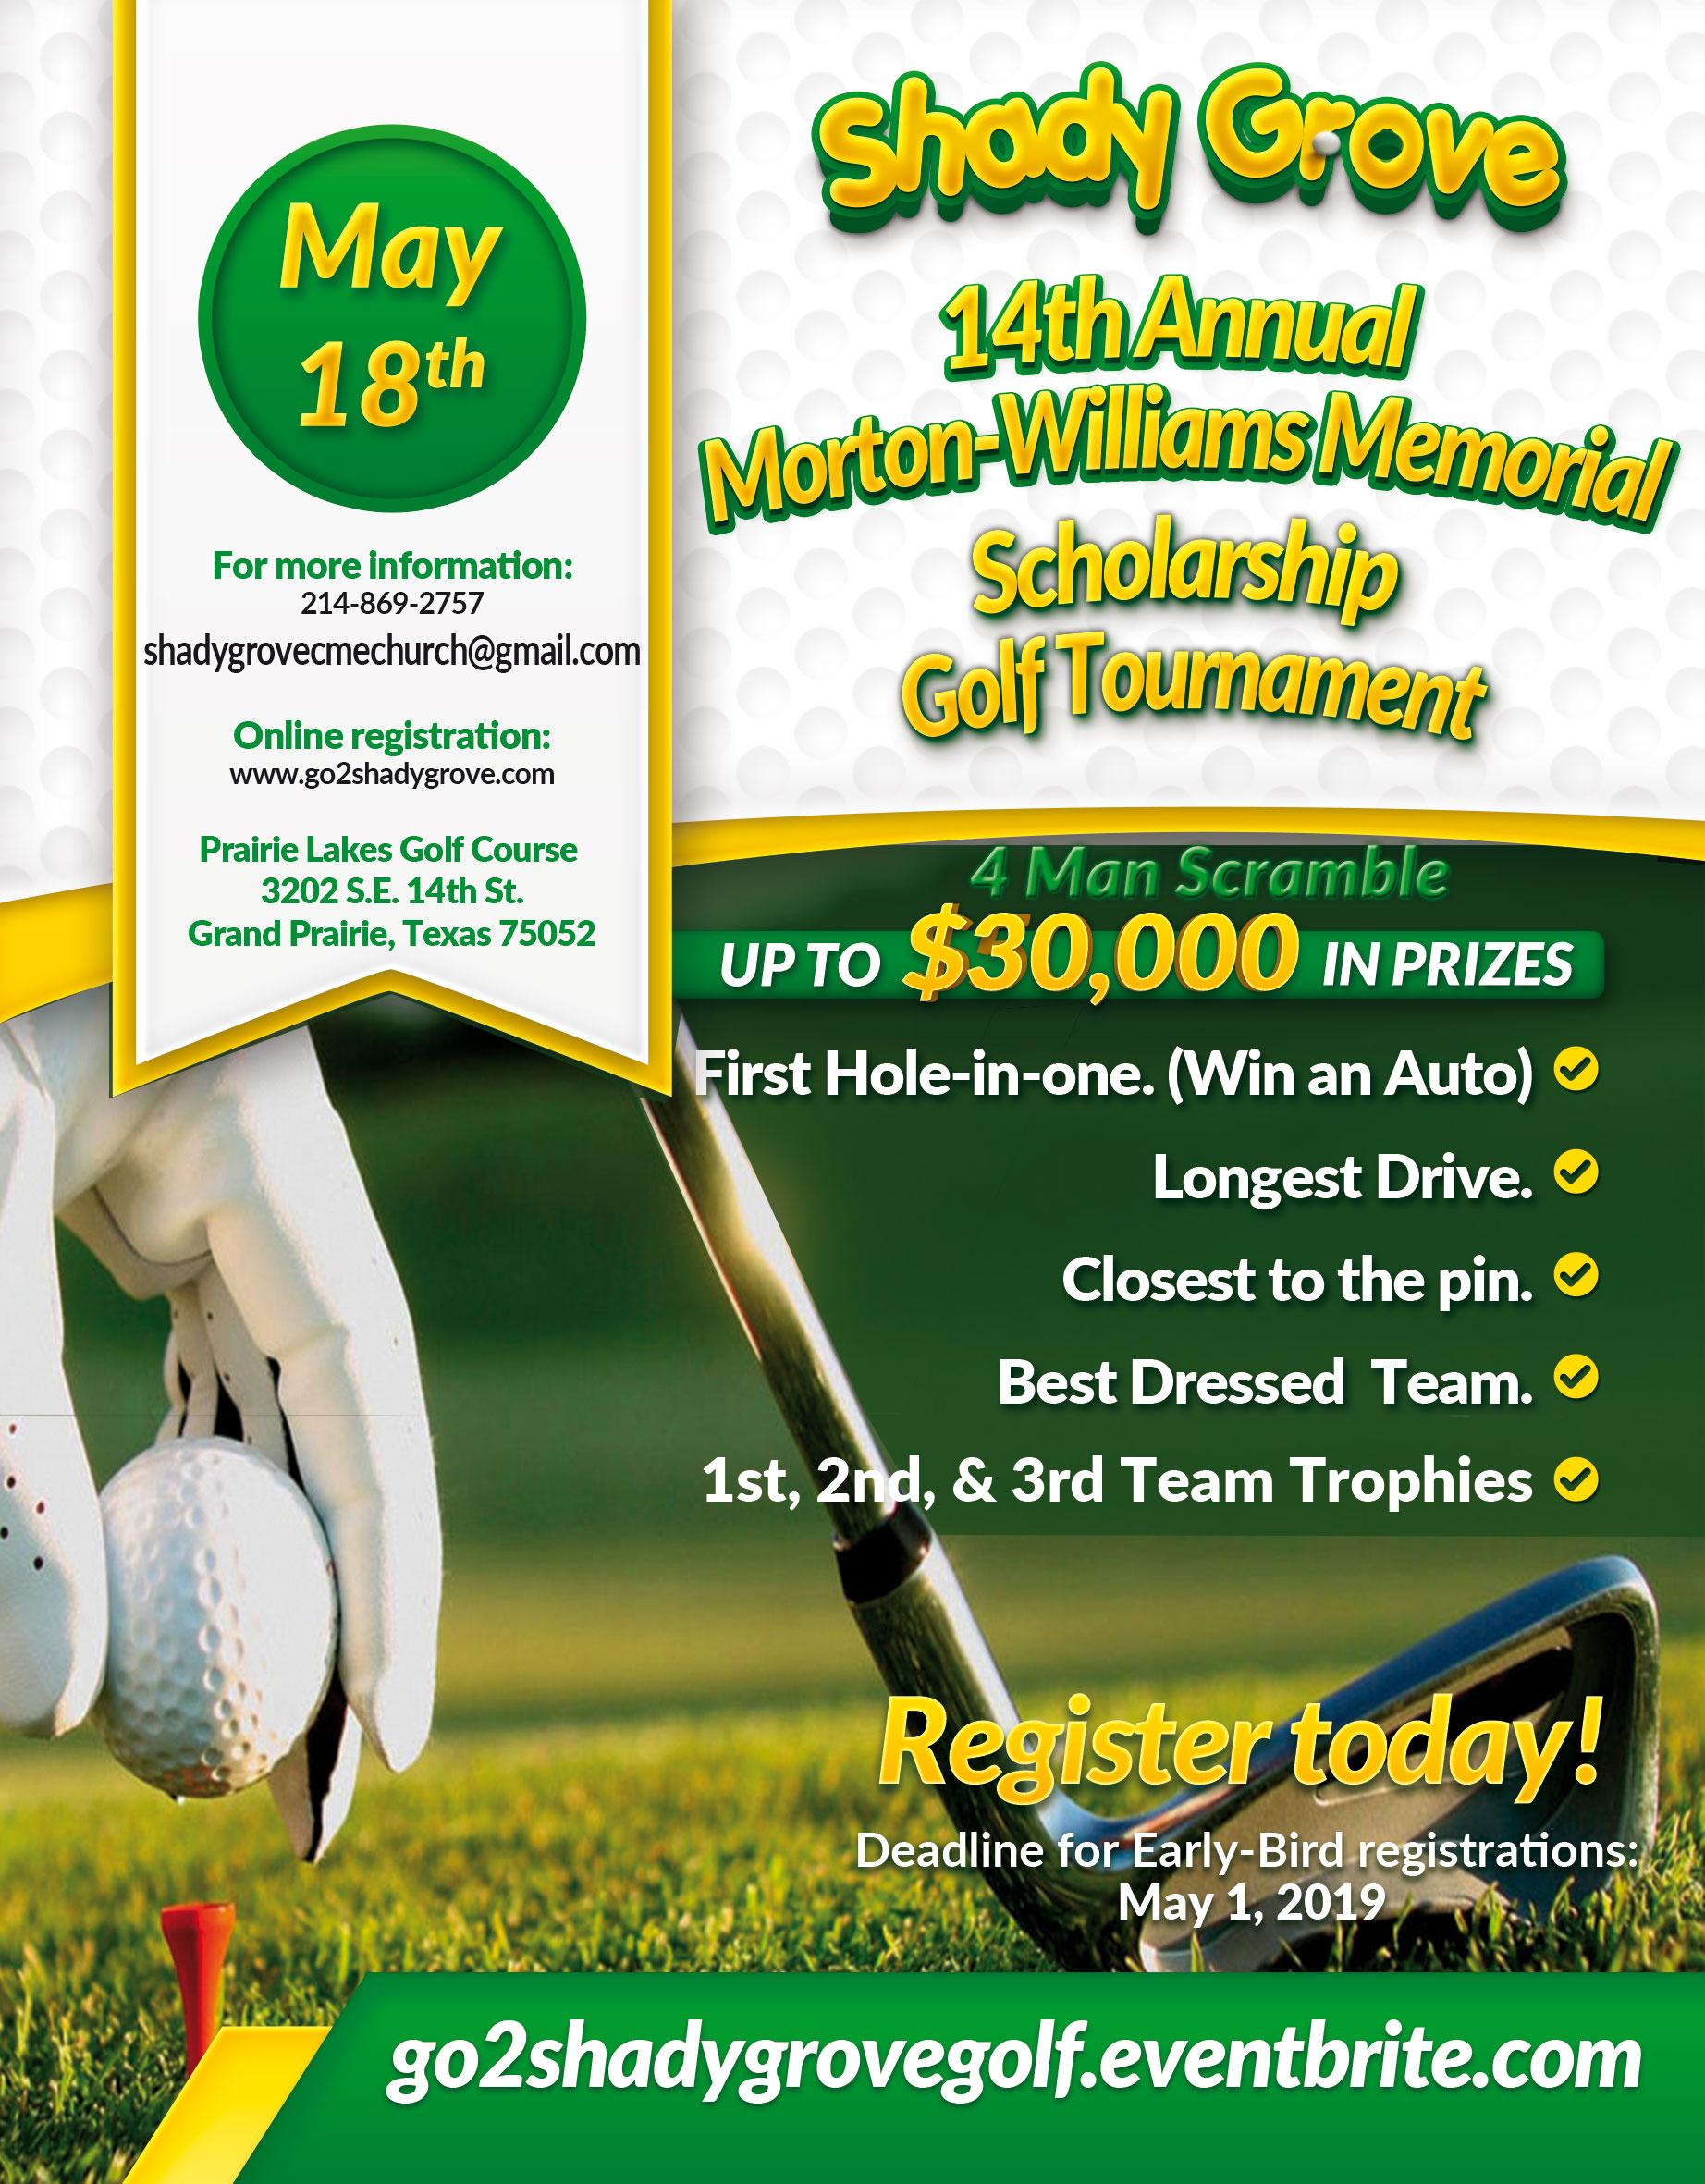 ShadyGrove - Morton-Williams Memorial Scholarship Golf Tournament